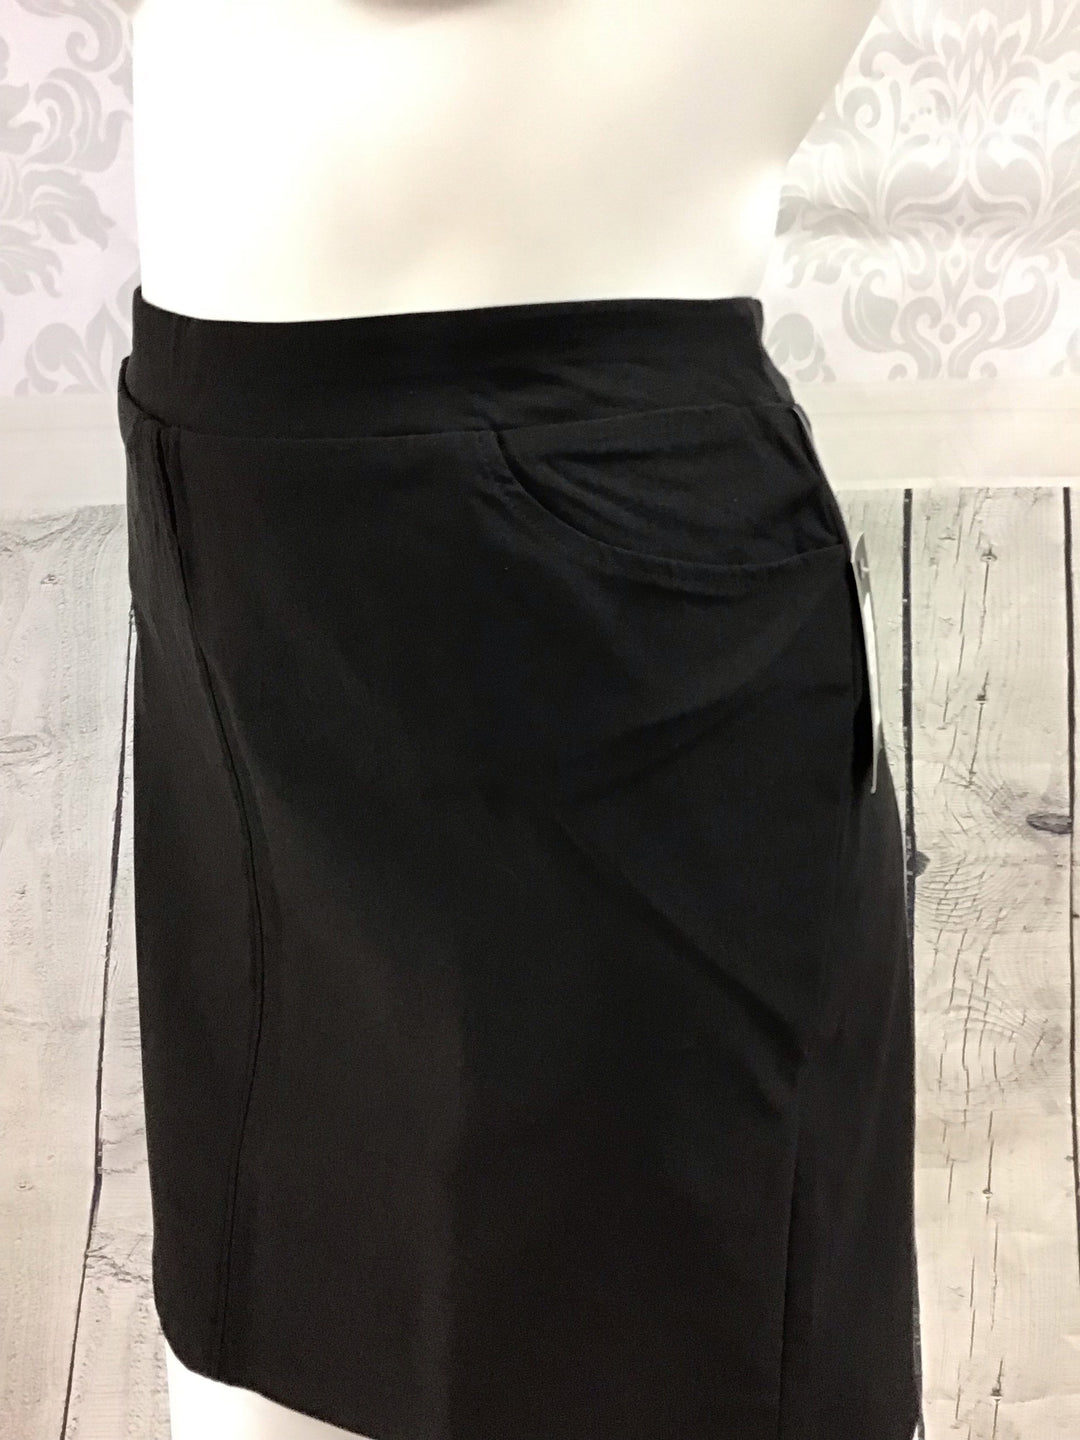 GG Pocket Skirt - Size 3 X